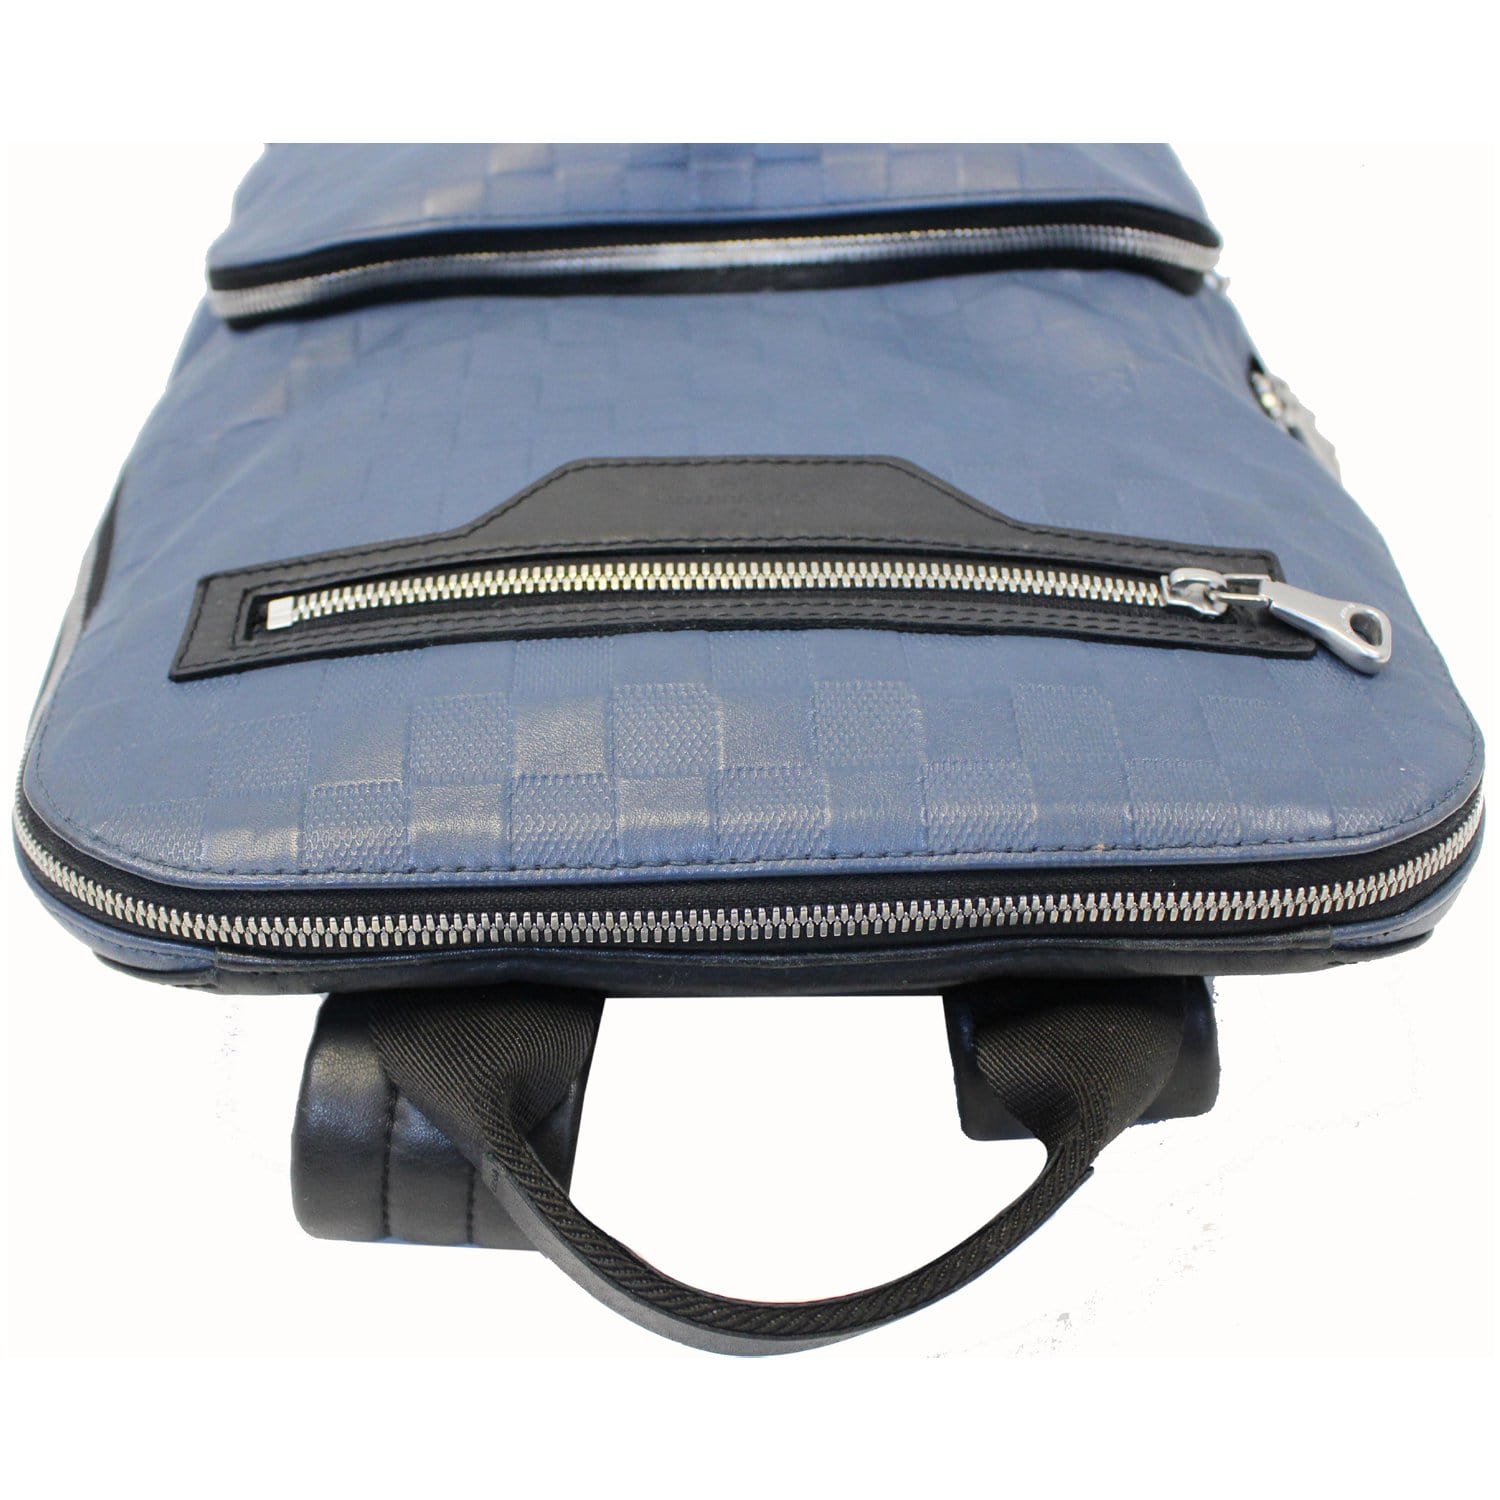 Authentic Louis Vuitton Avenue Infini Leather Damier Navy Blue Backpack